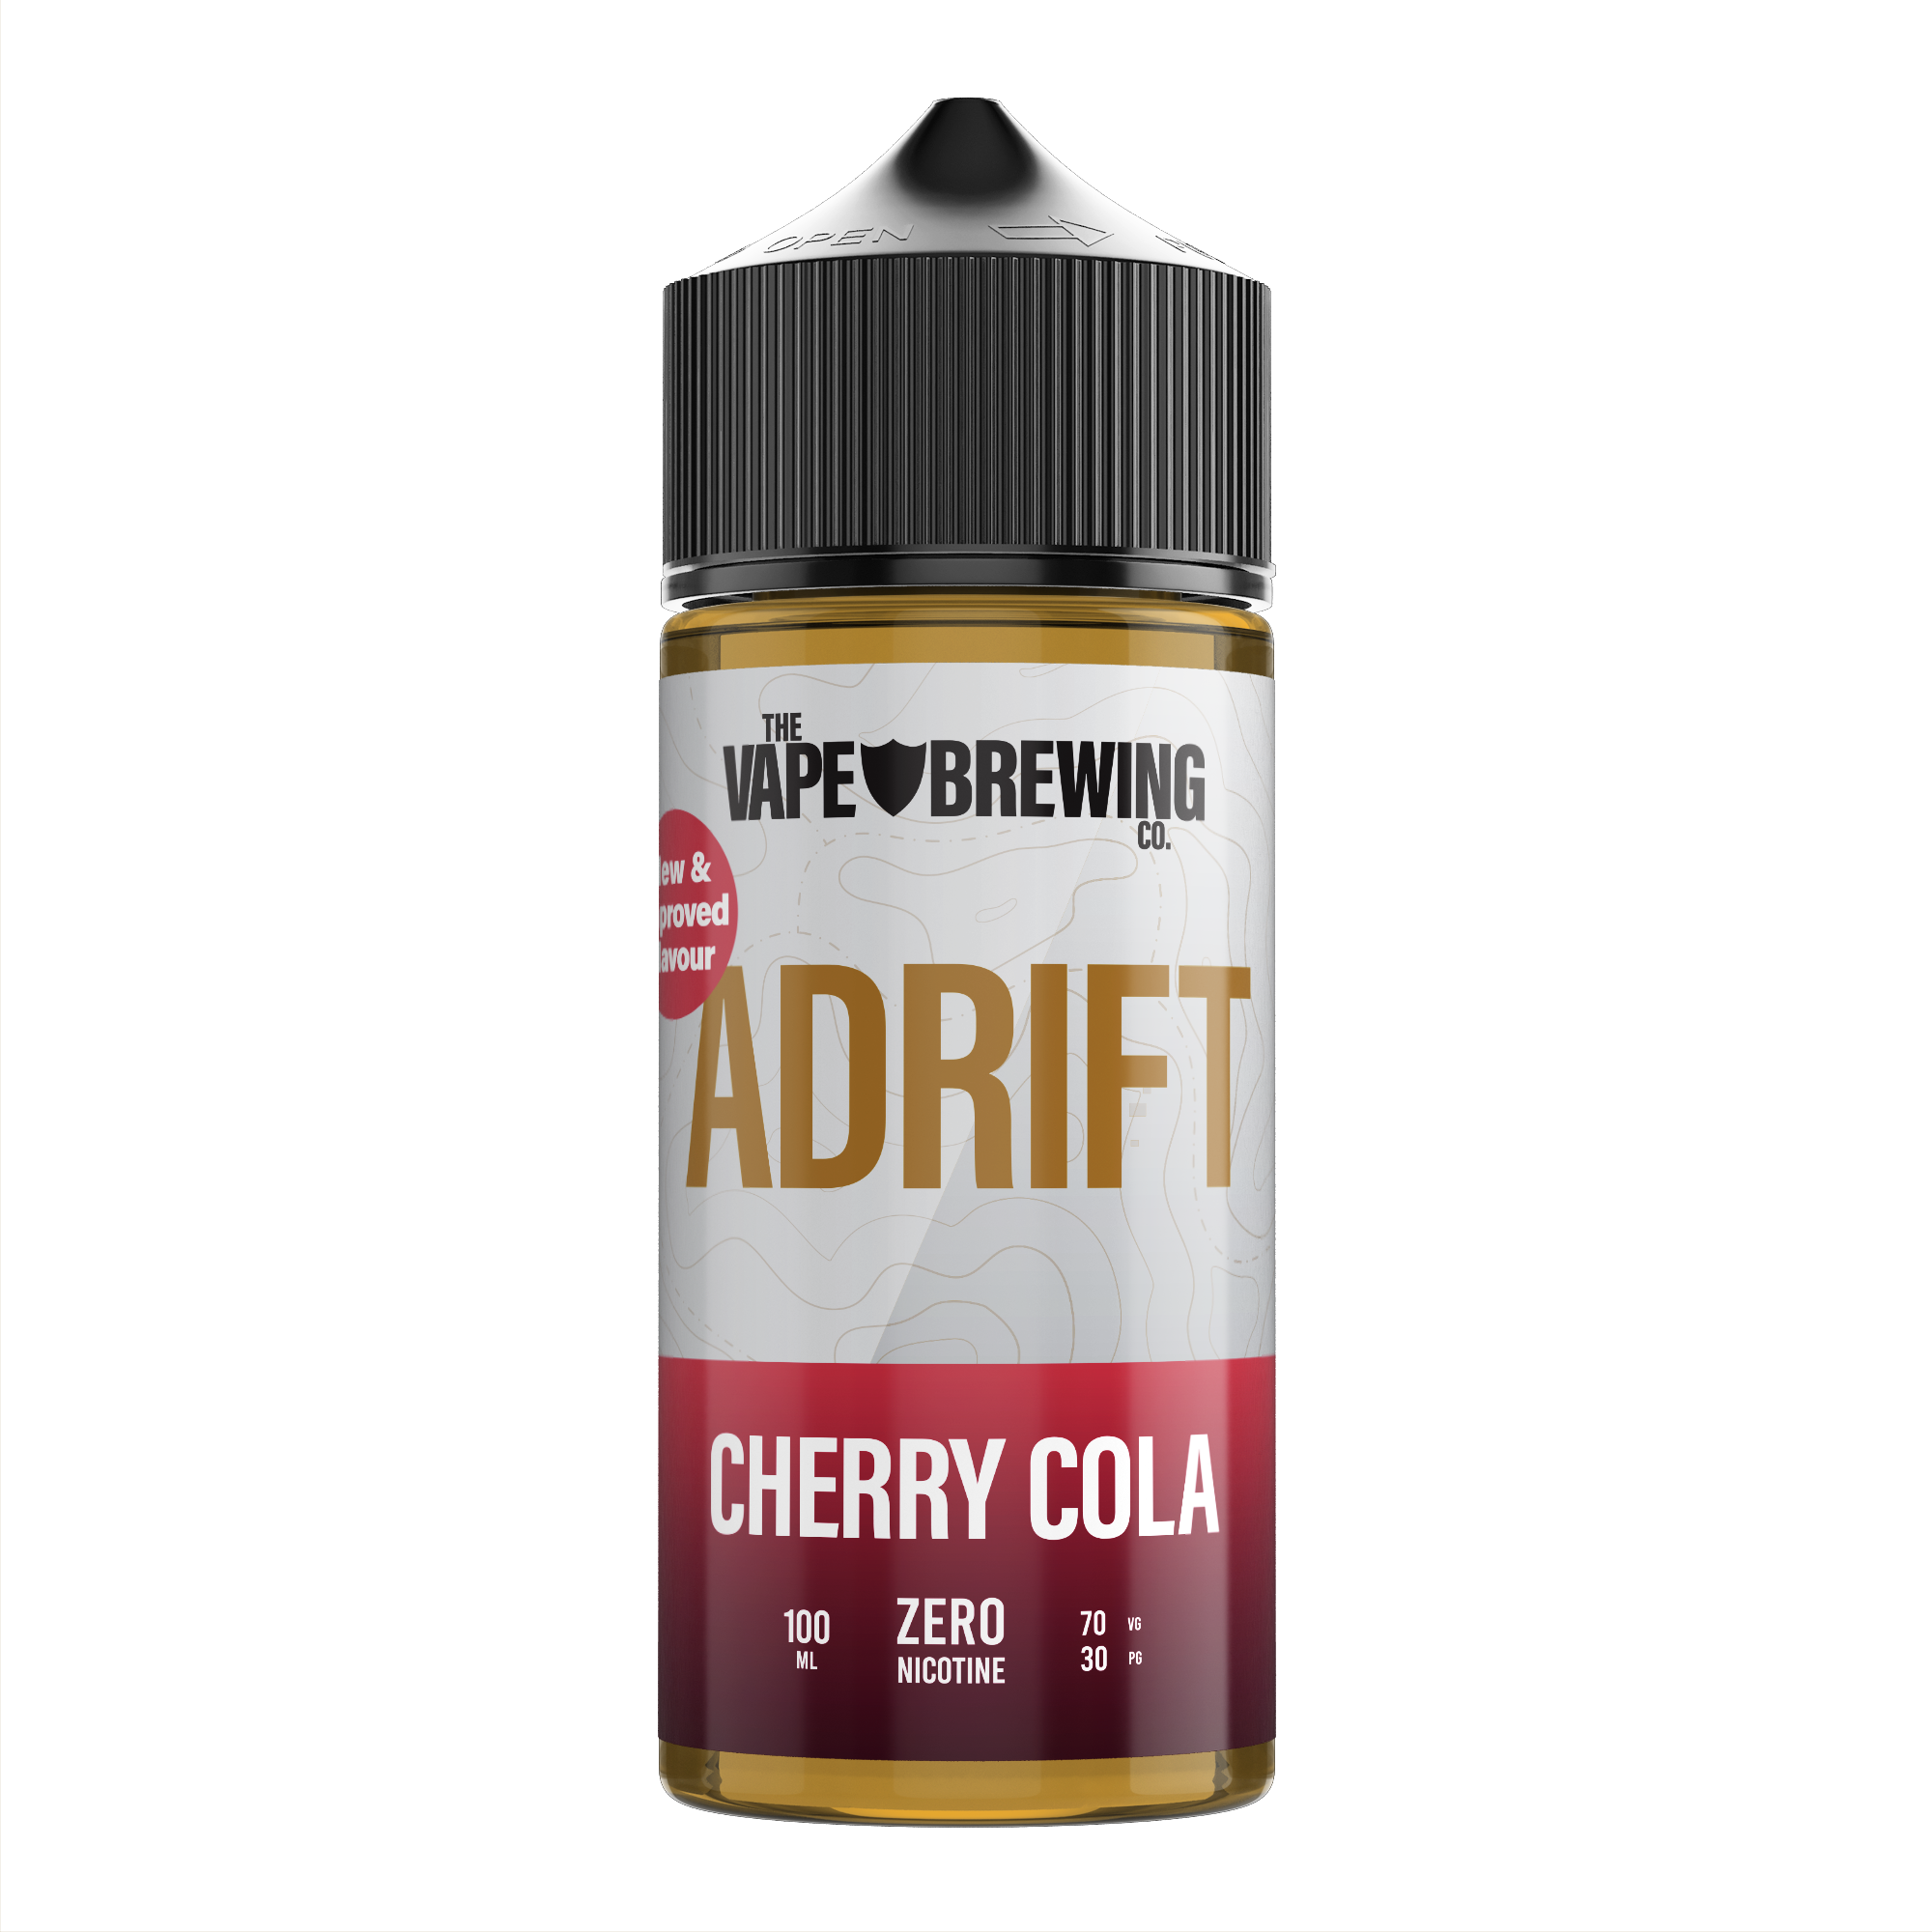 Cherry Cola 100ml Shortfill by Adrift Vape Brewing Co.